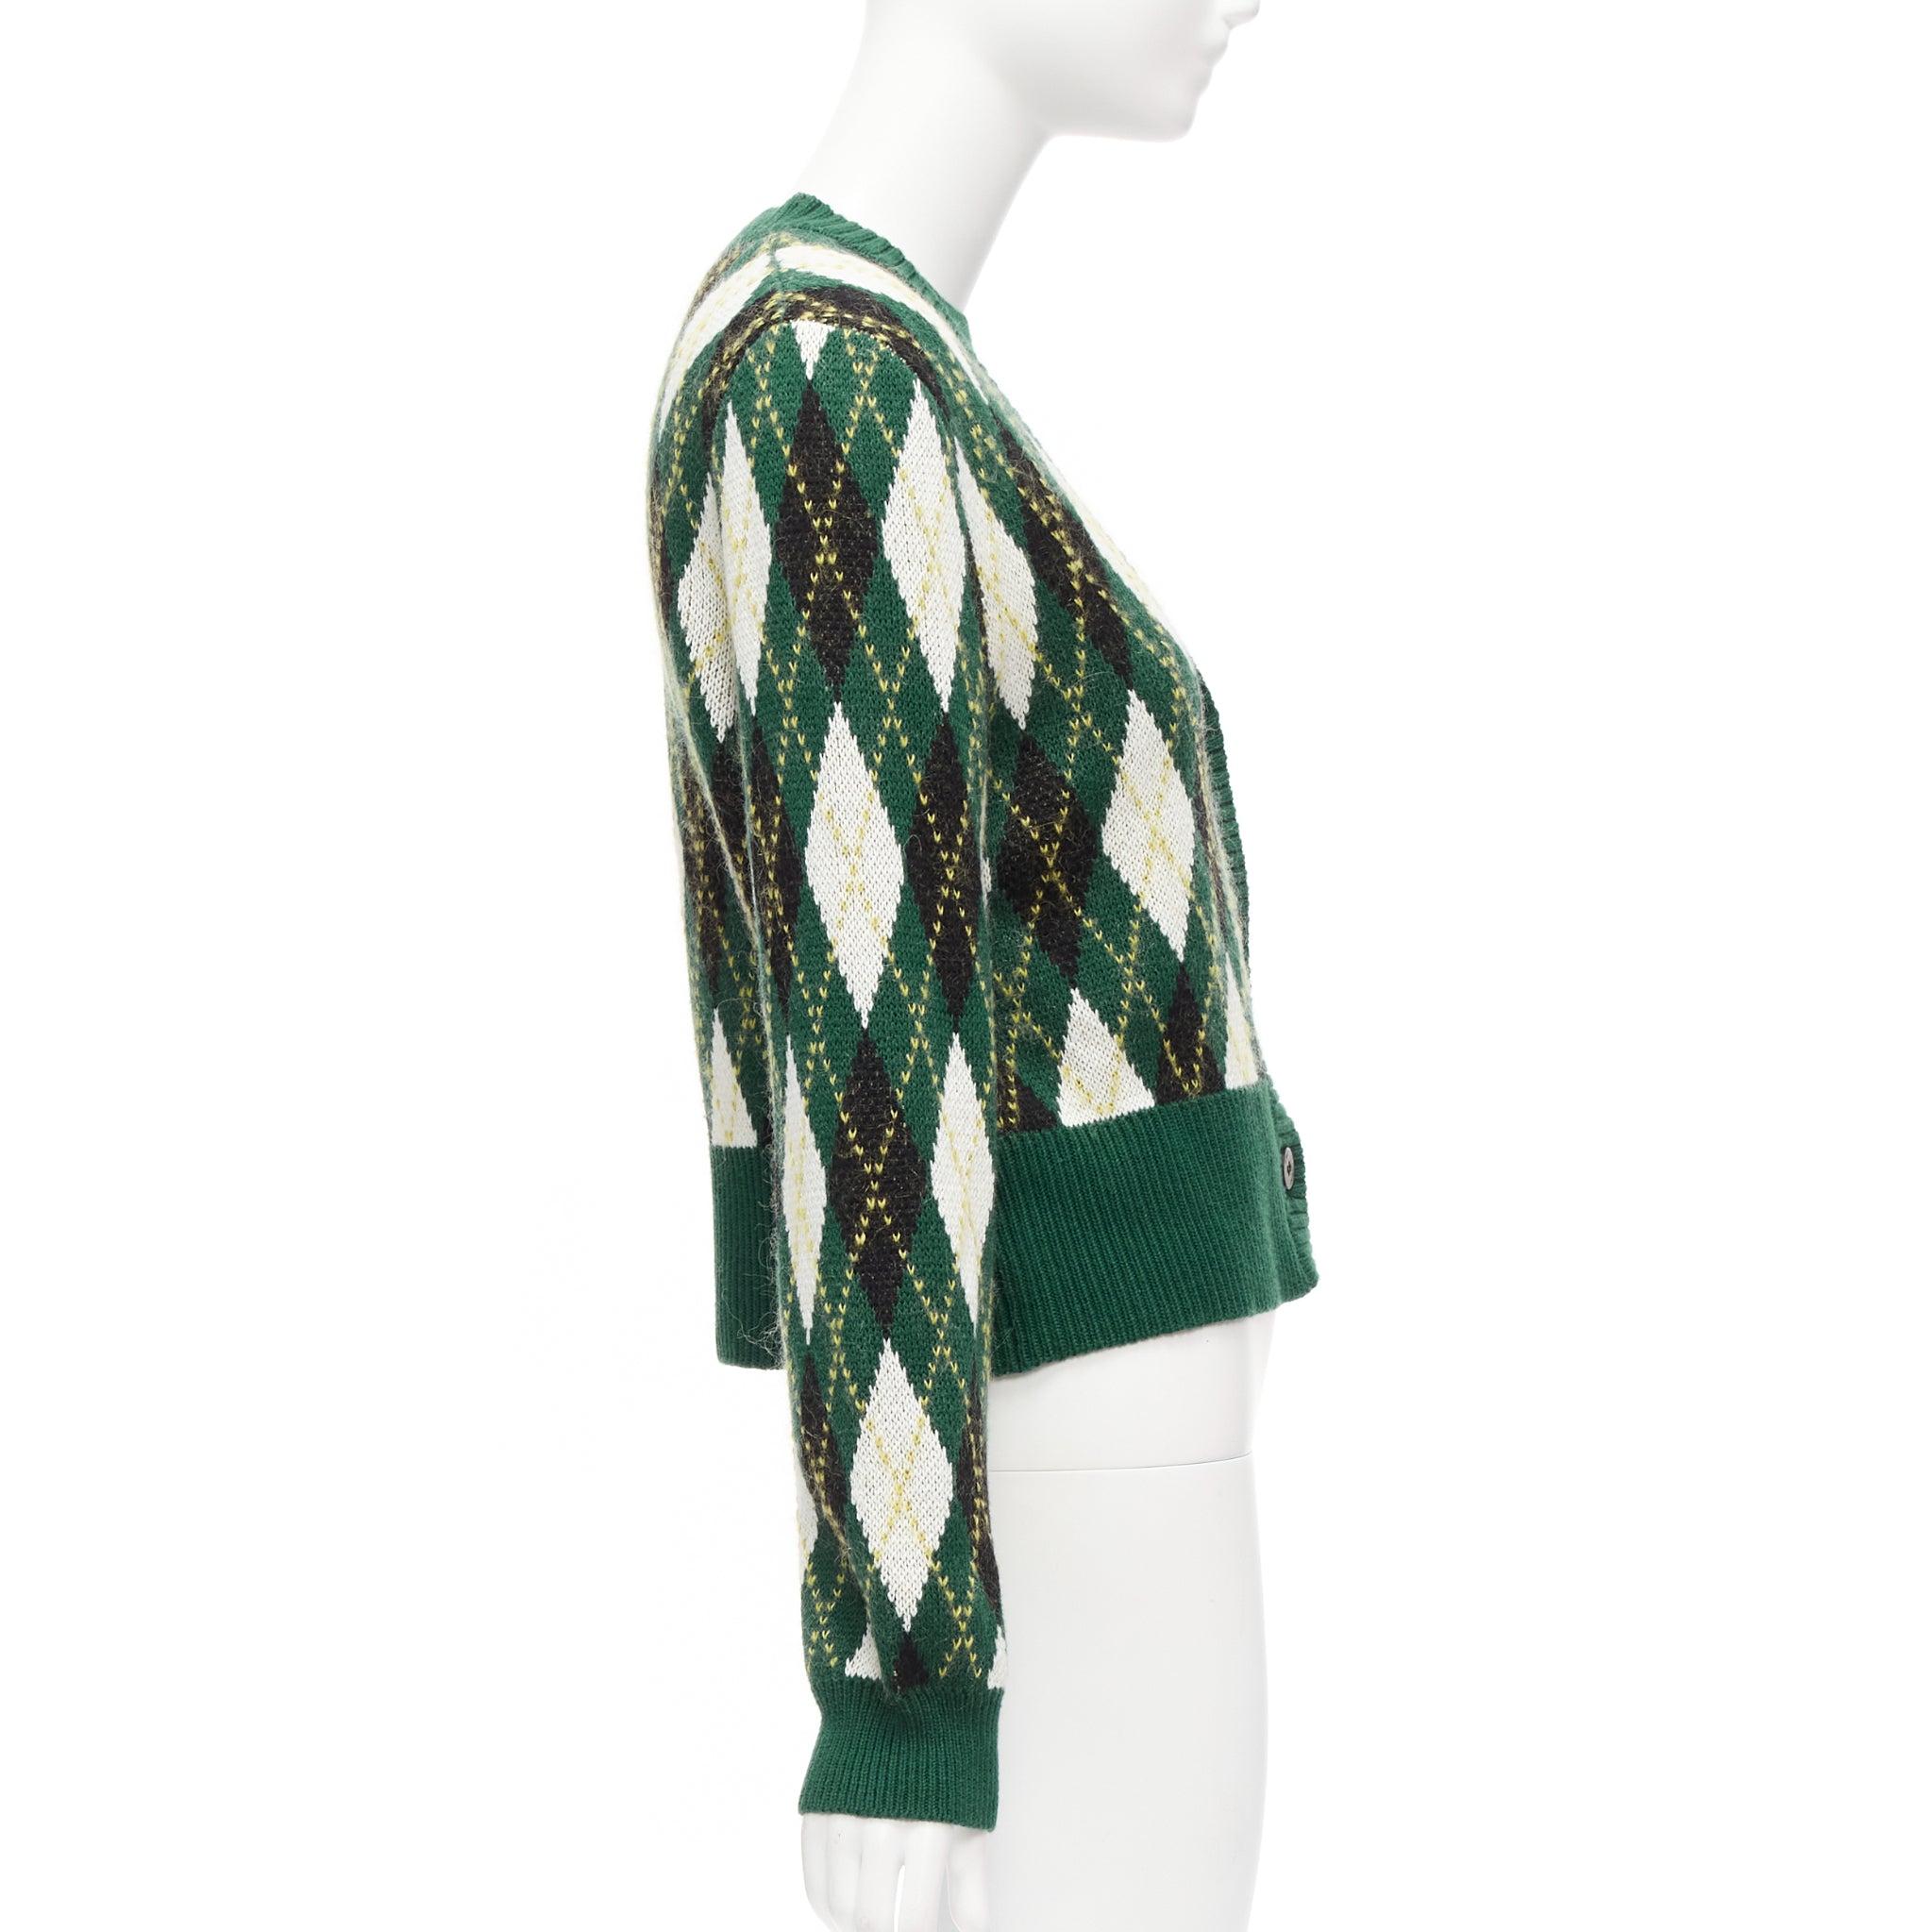 STAUD Knave green black Argyle cotton wool sweater vest cardigan twin set XS For Sale 1